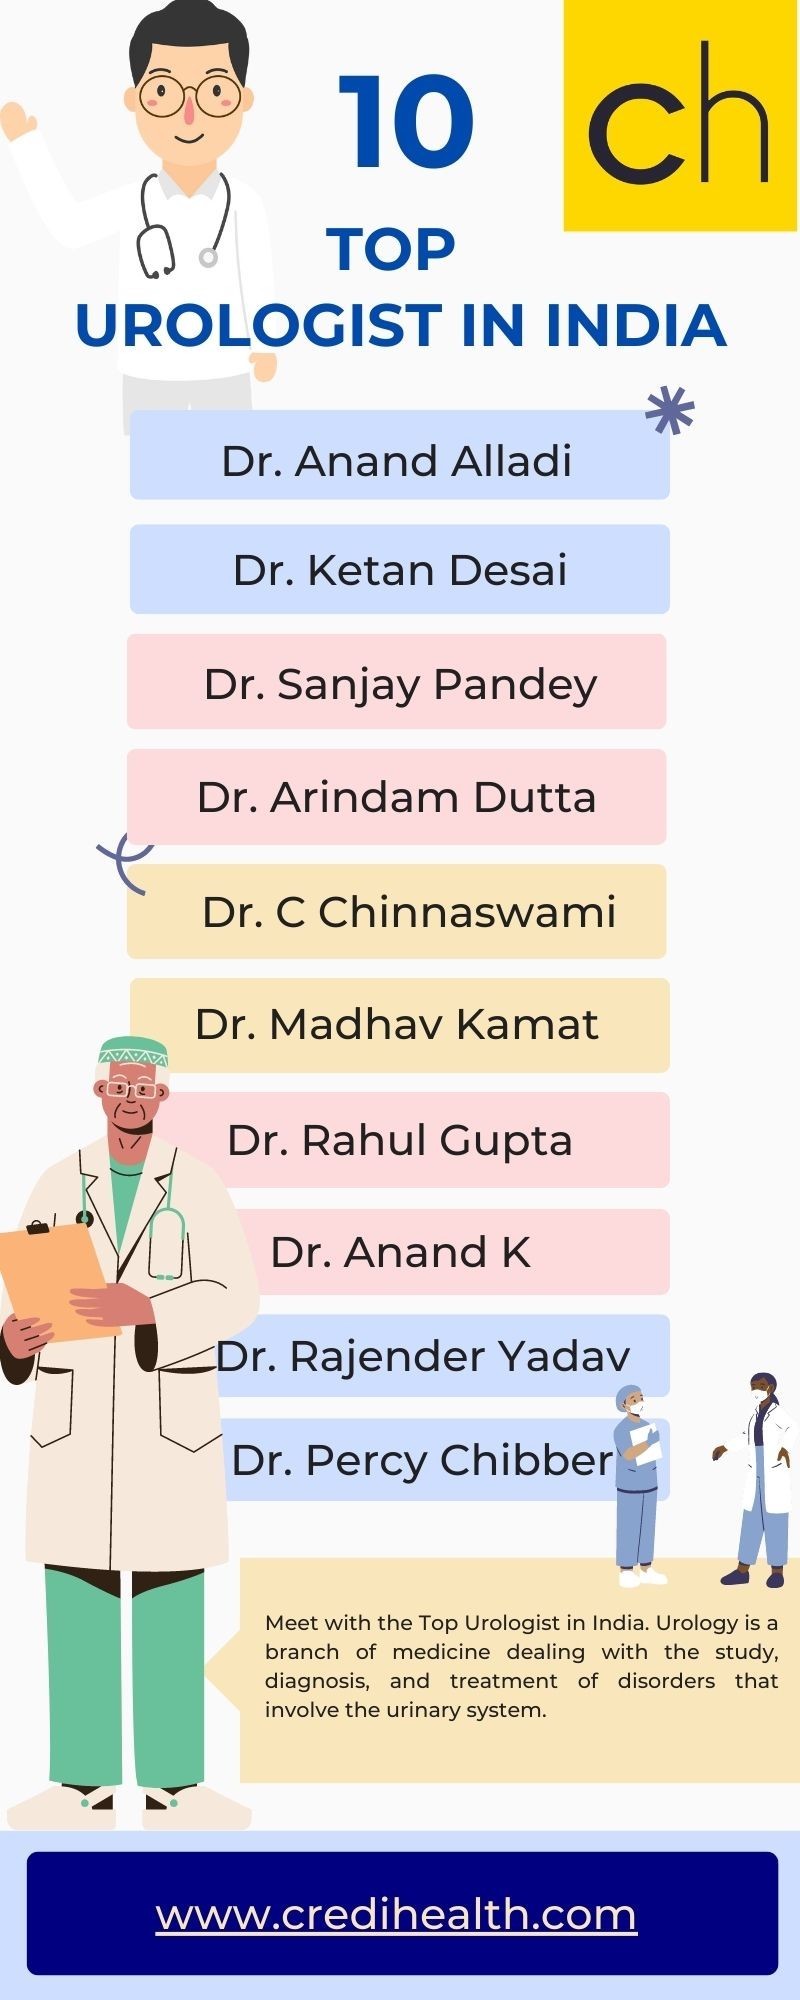 Top 10 Urologist in India - Credihealth